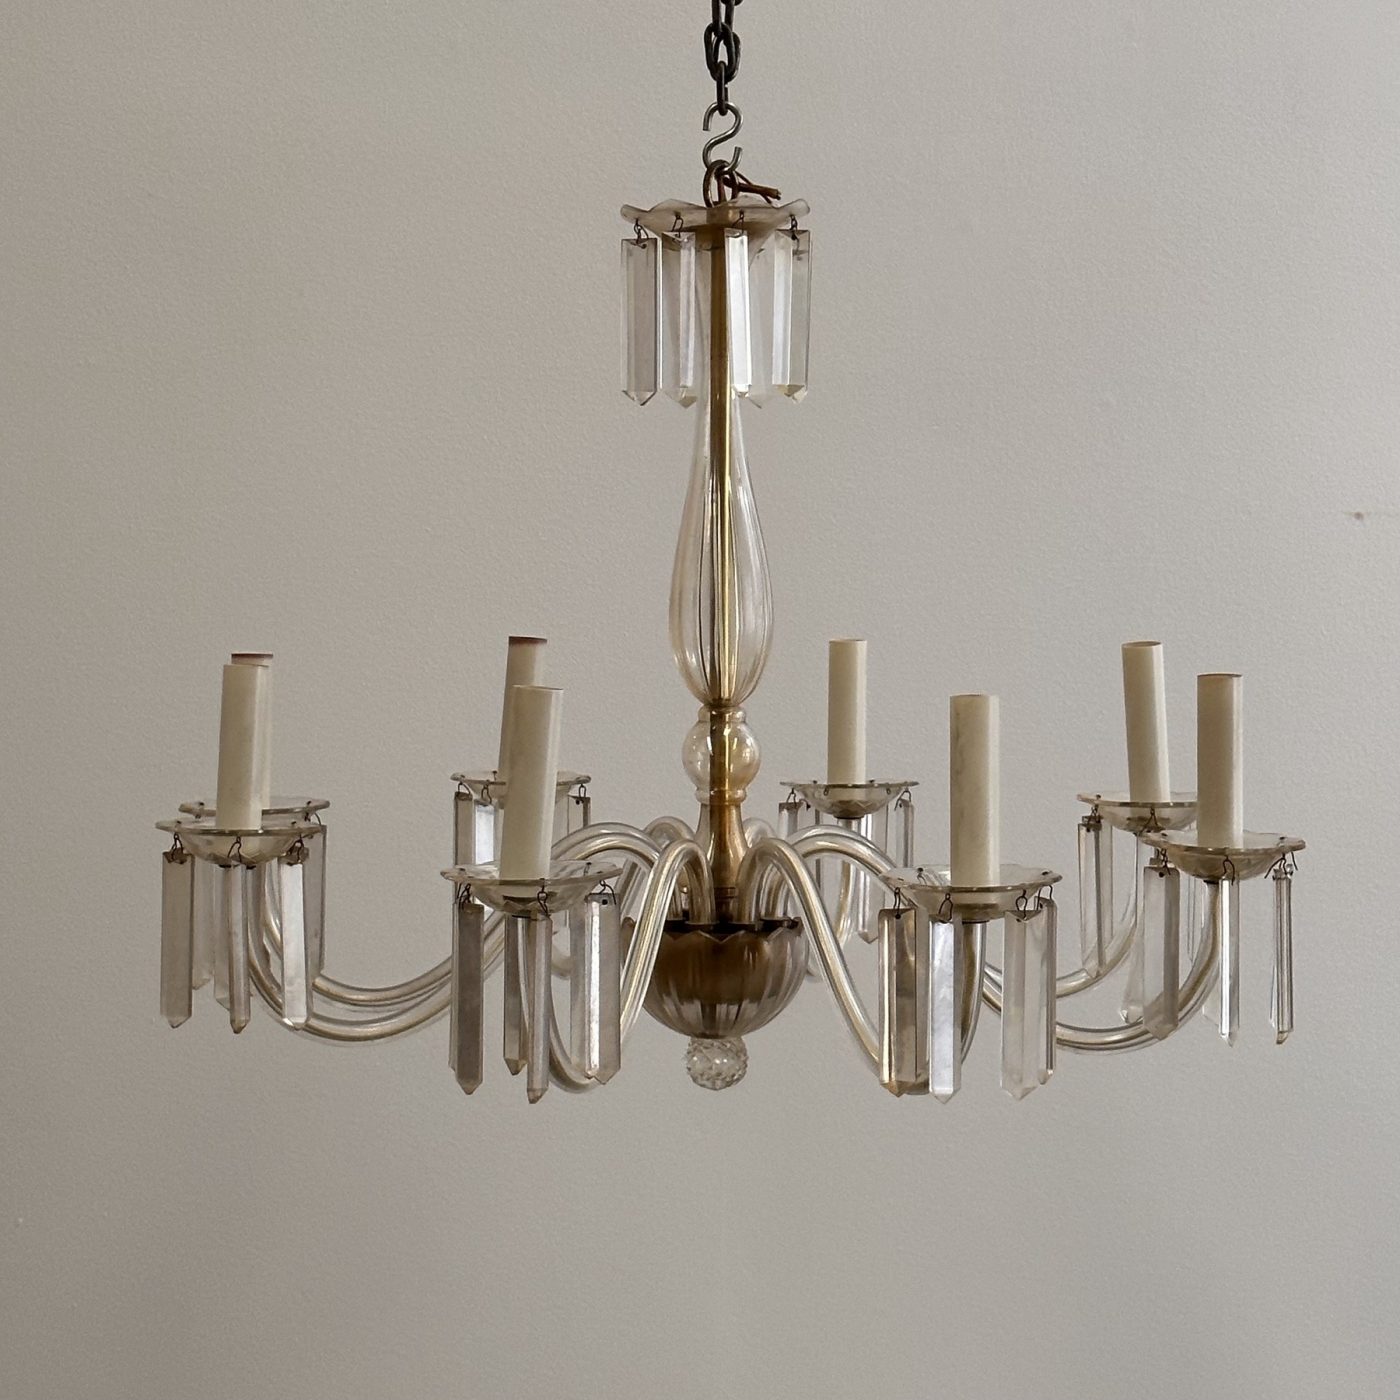 objet-vagabond-italian-chandelier0008